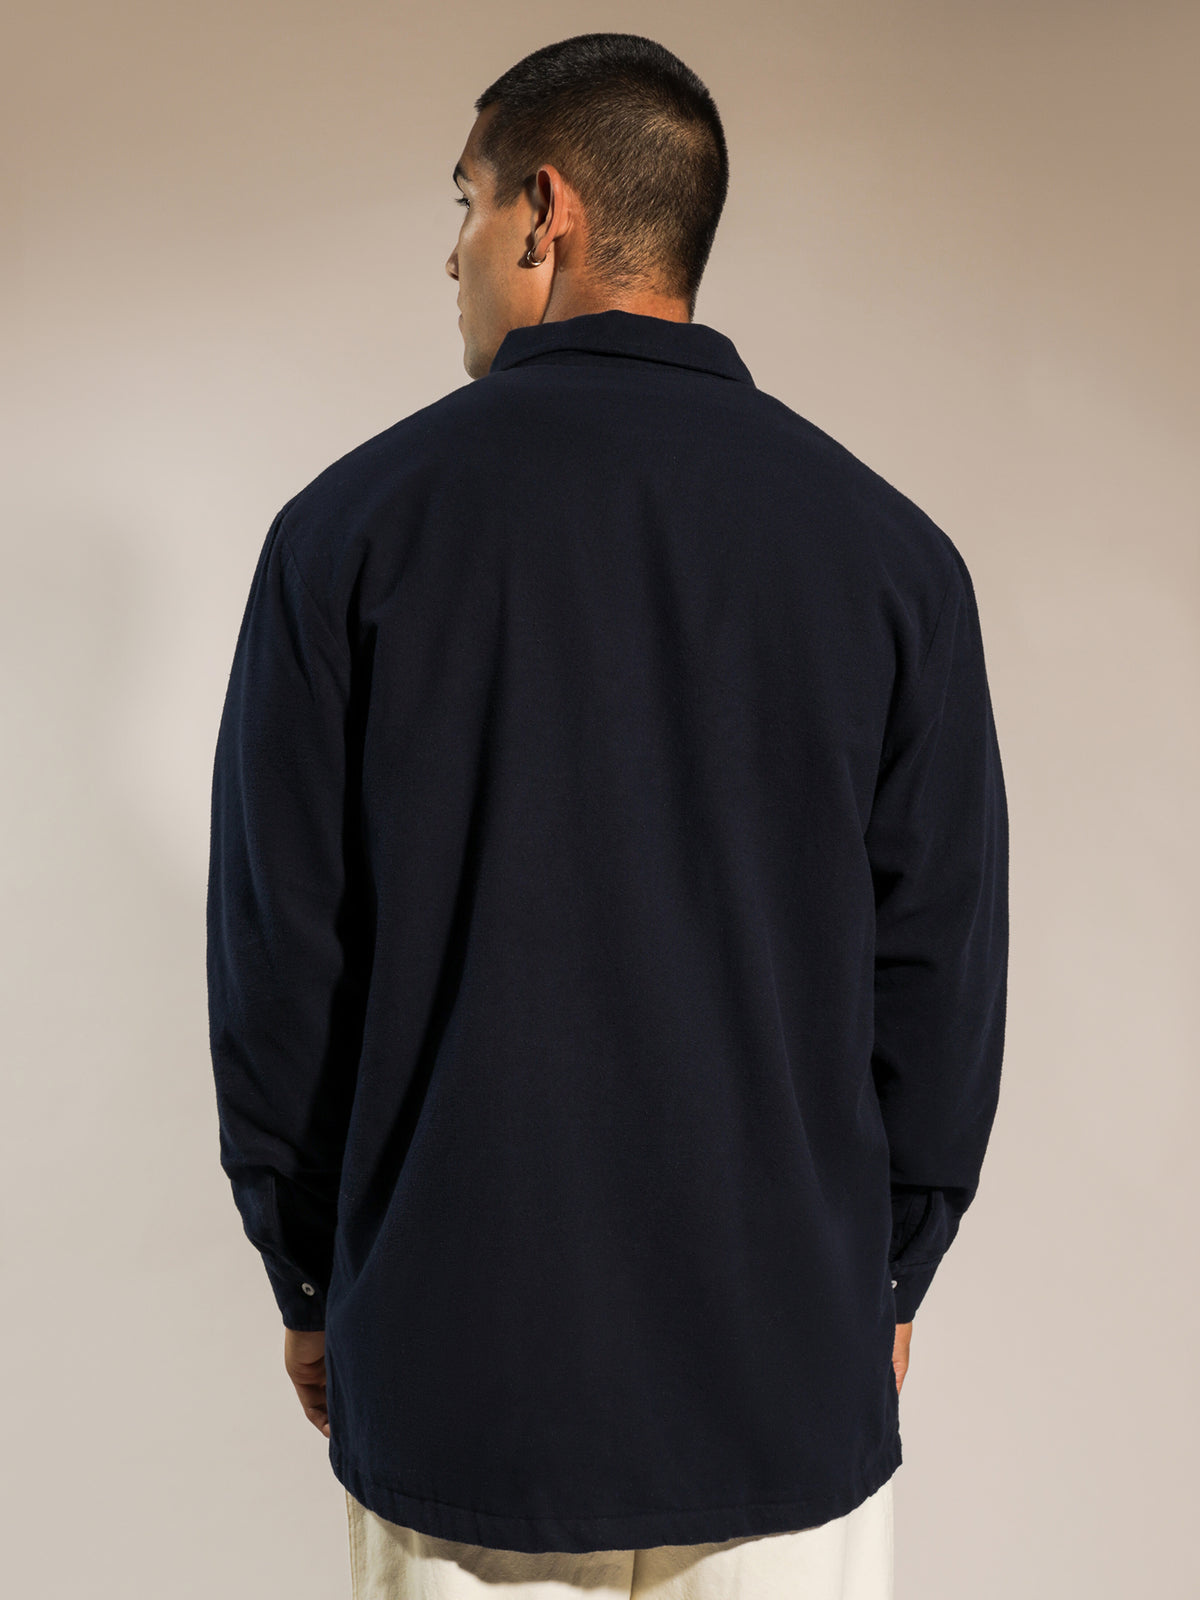 Flannel Long Sleeve Zip Shirt in Navy